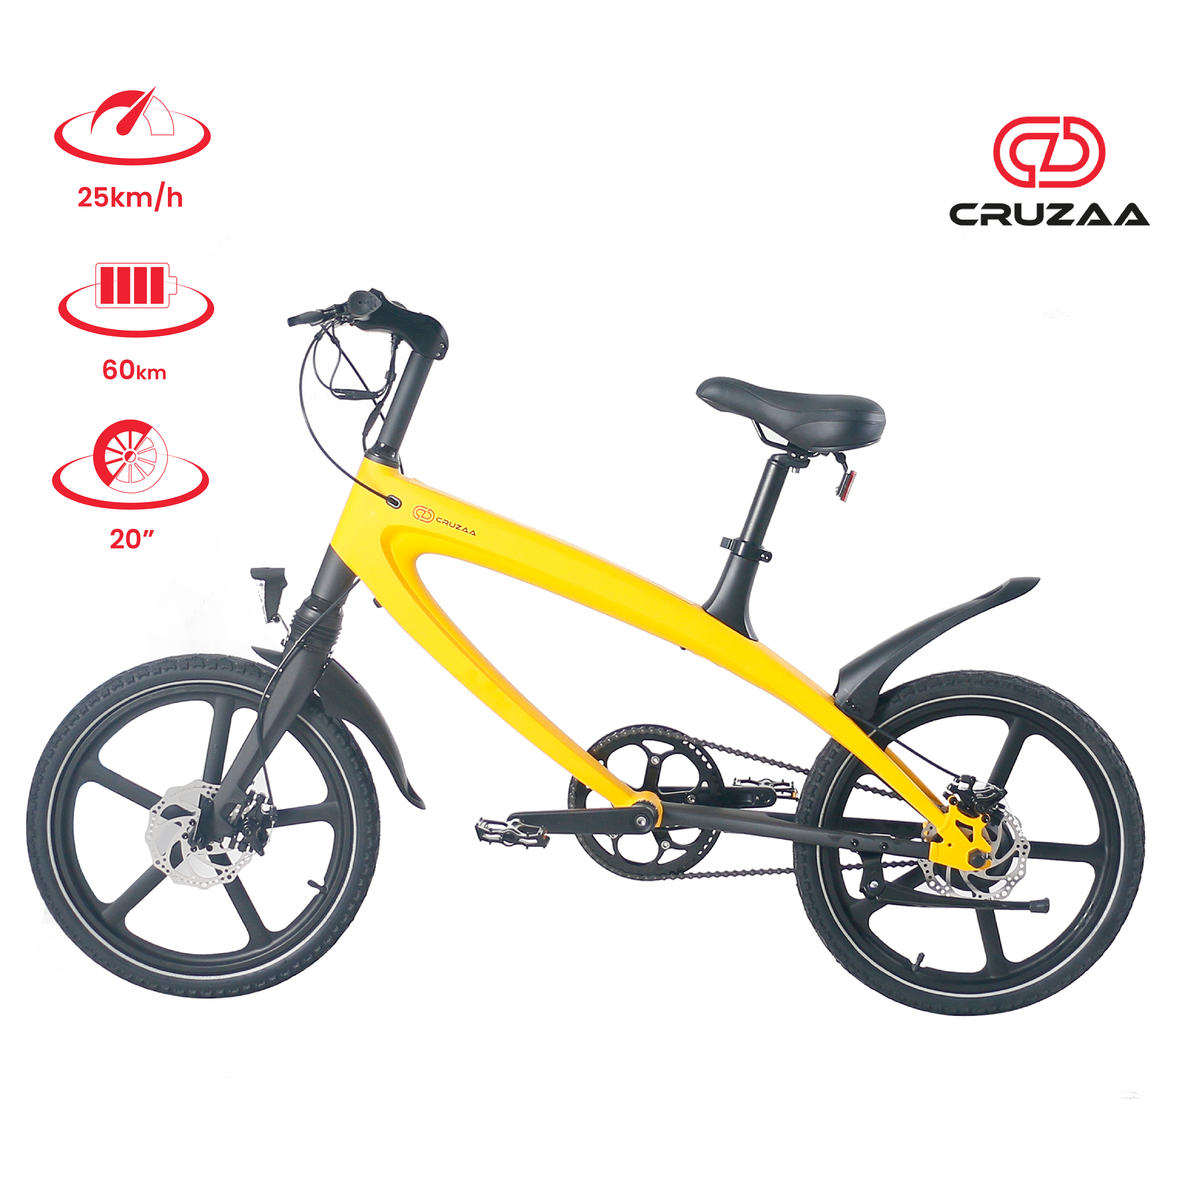 Cruzaa E-Bike